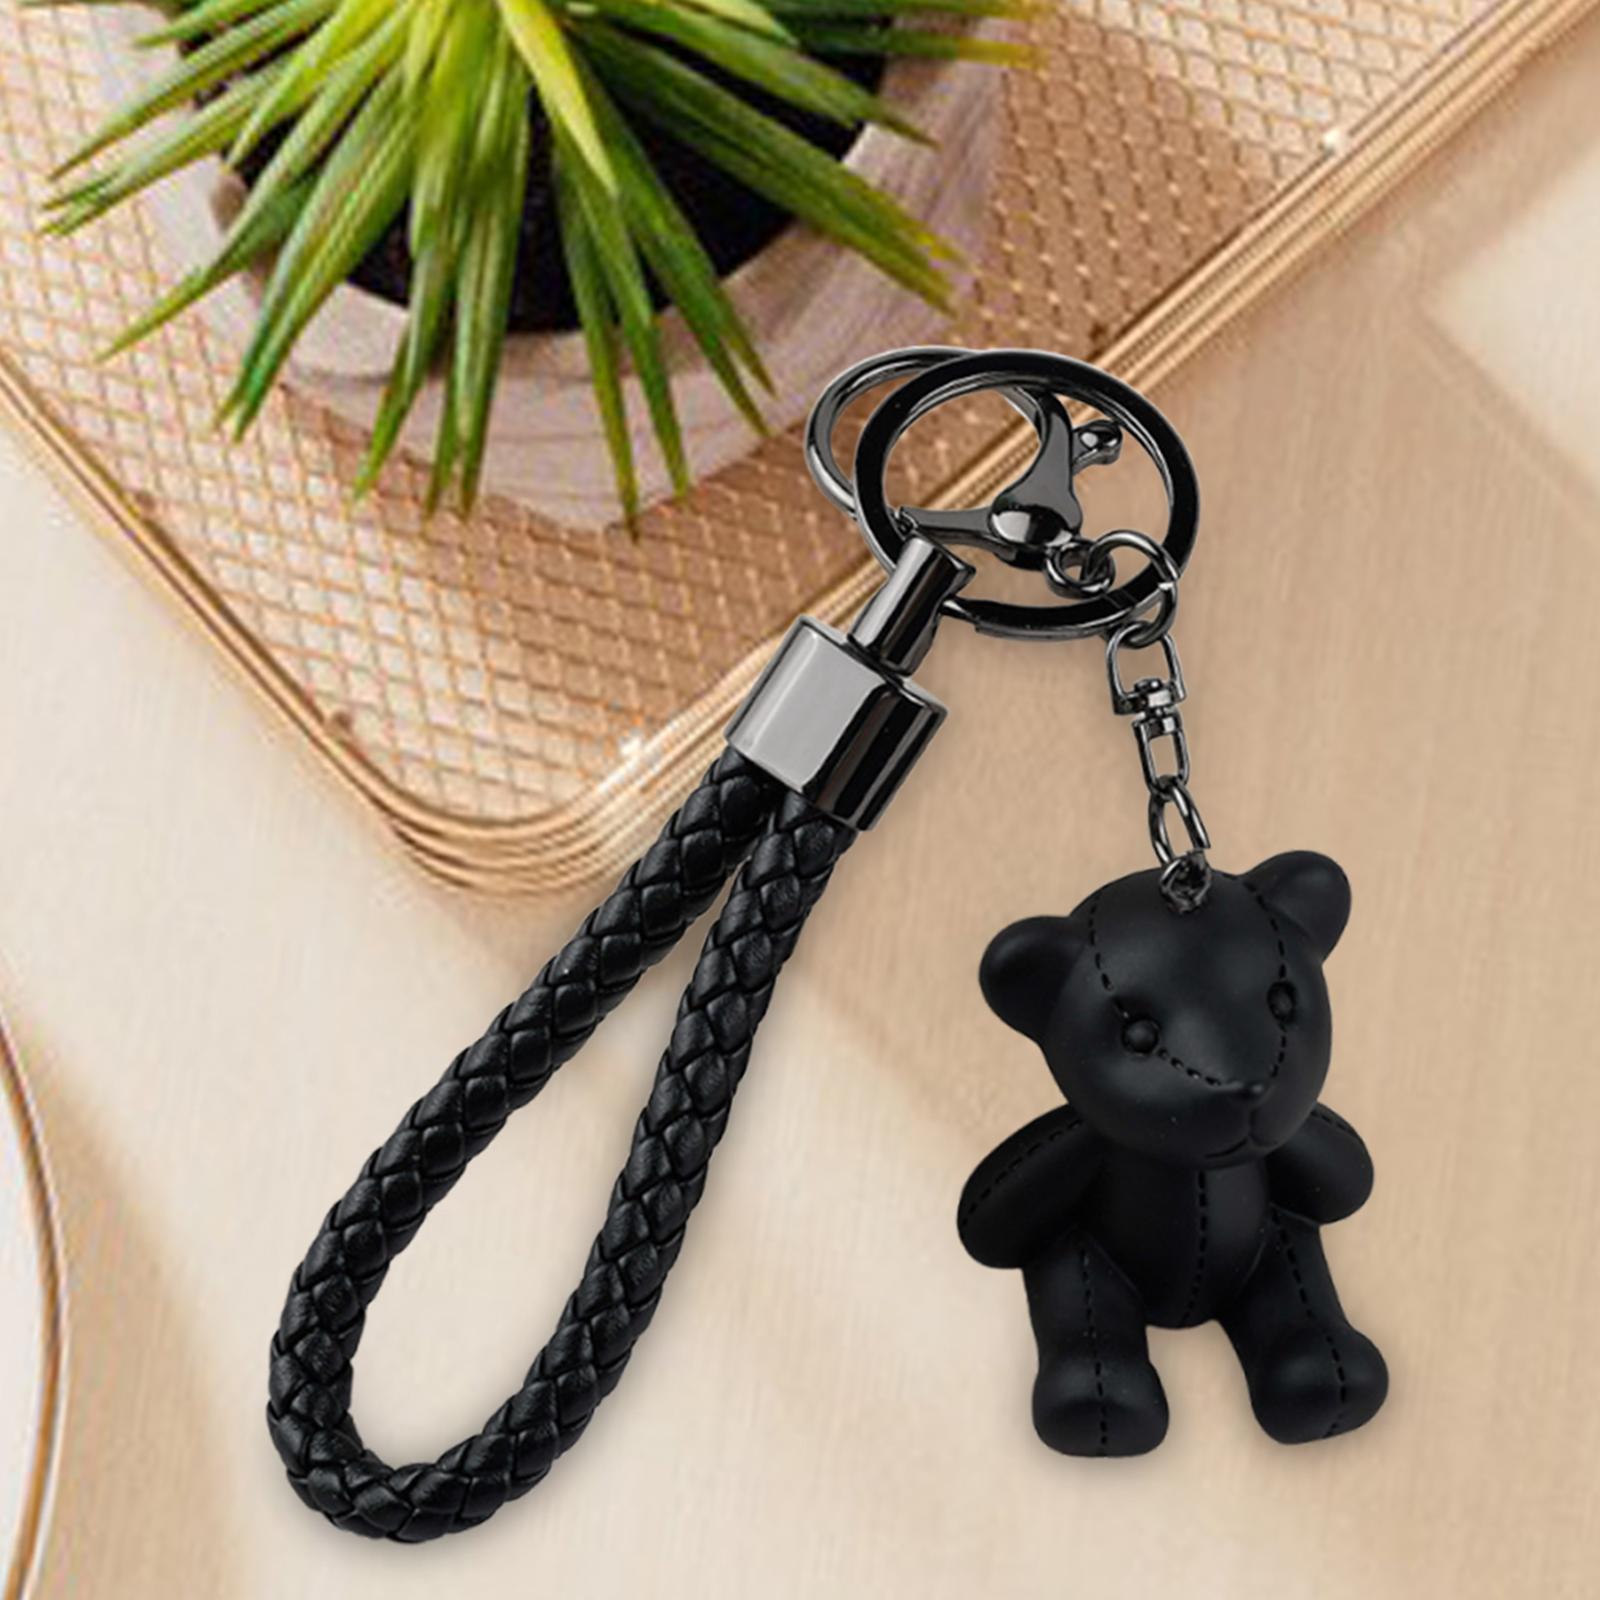 Bear Key Chain Pendant Resin Animal Pendant Creative Gift Car Bag Keychain Black